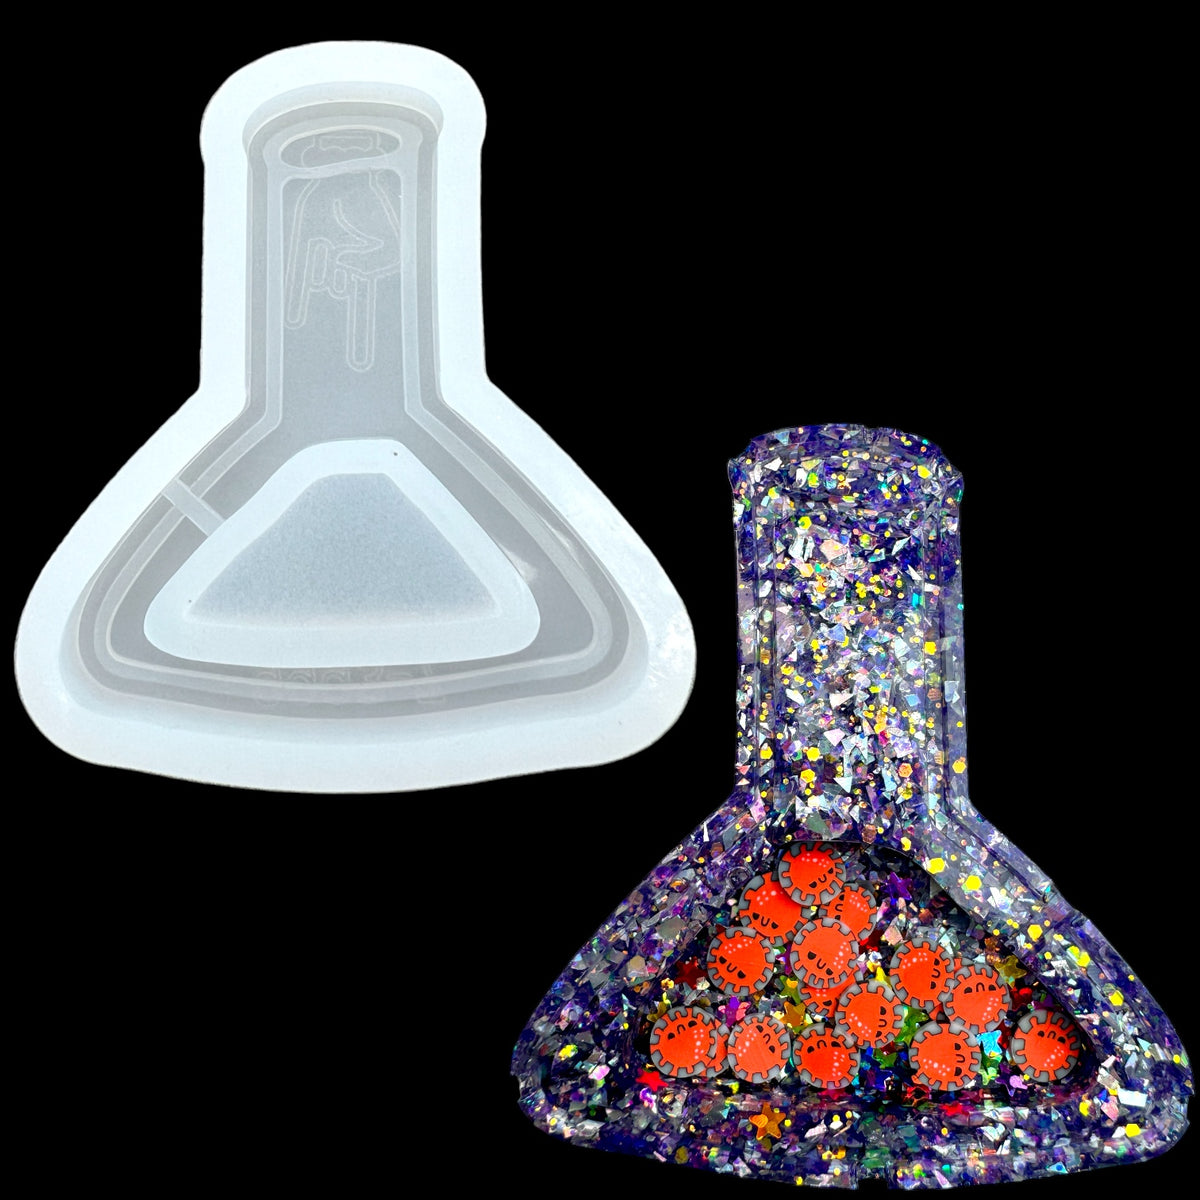 Beaker Erlenmeyer Flask Shaker Badge Reel or Phone Grip Shaker Silicone Mold for Epoxy and UV Resin Art